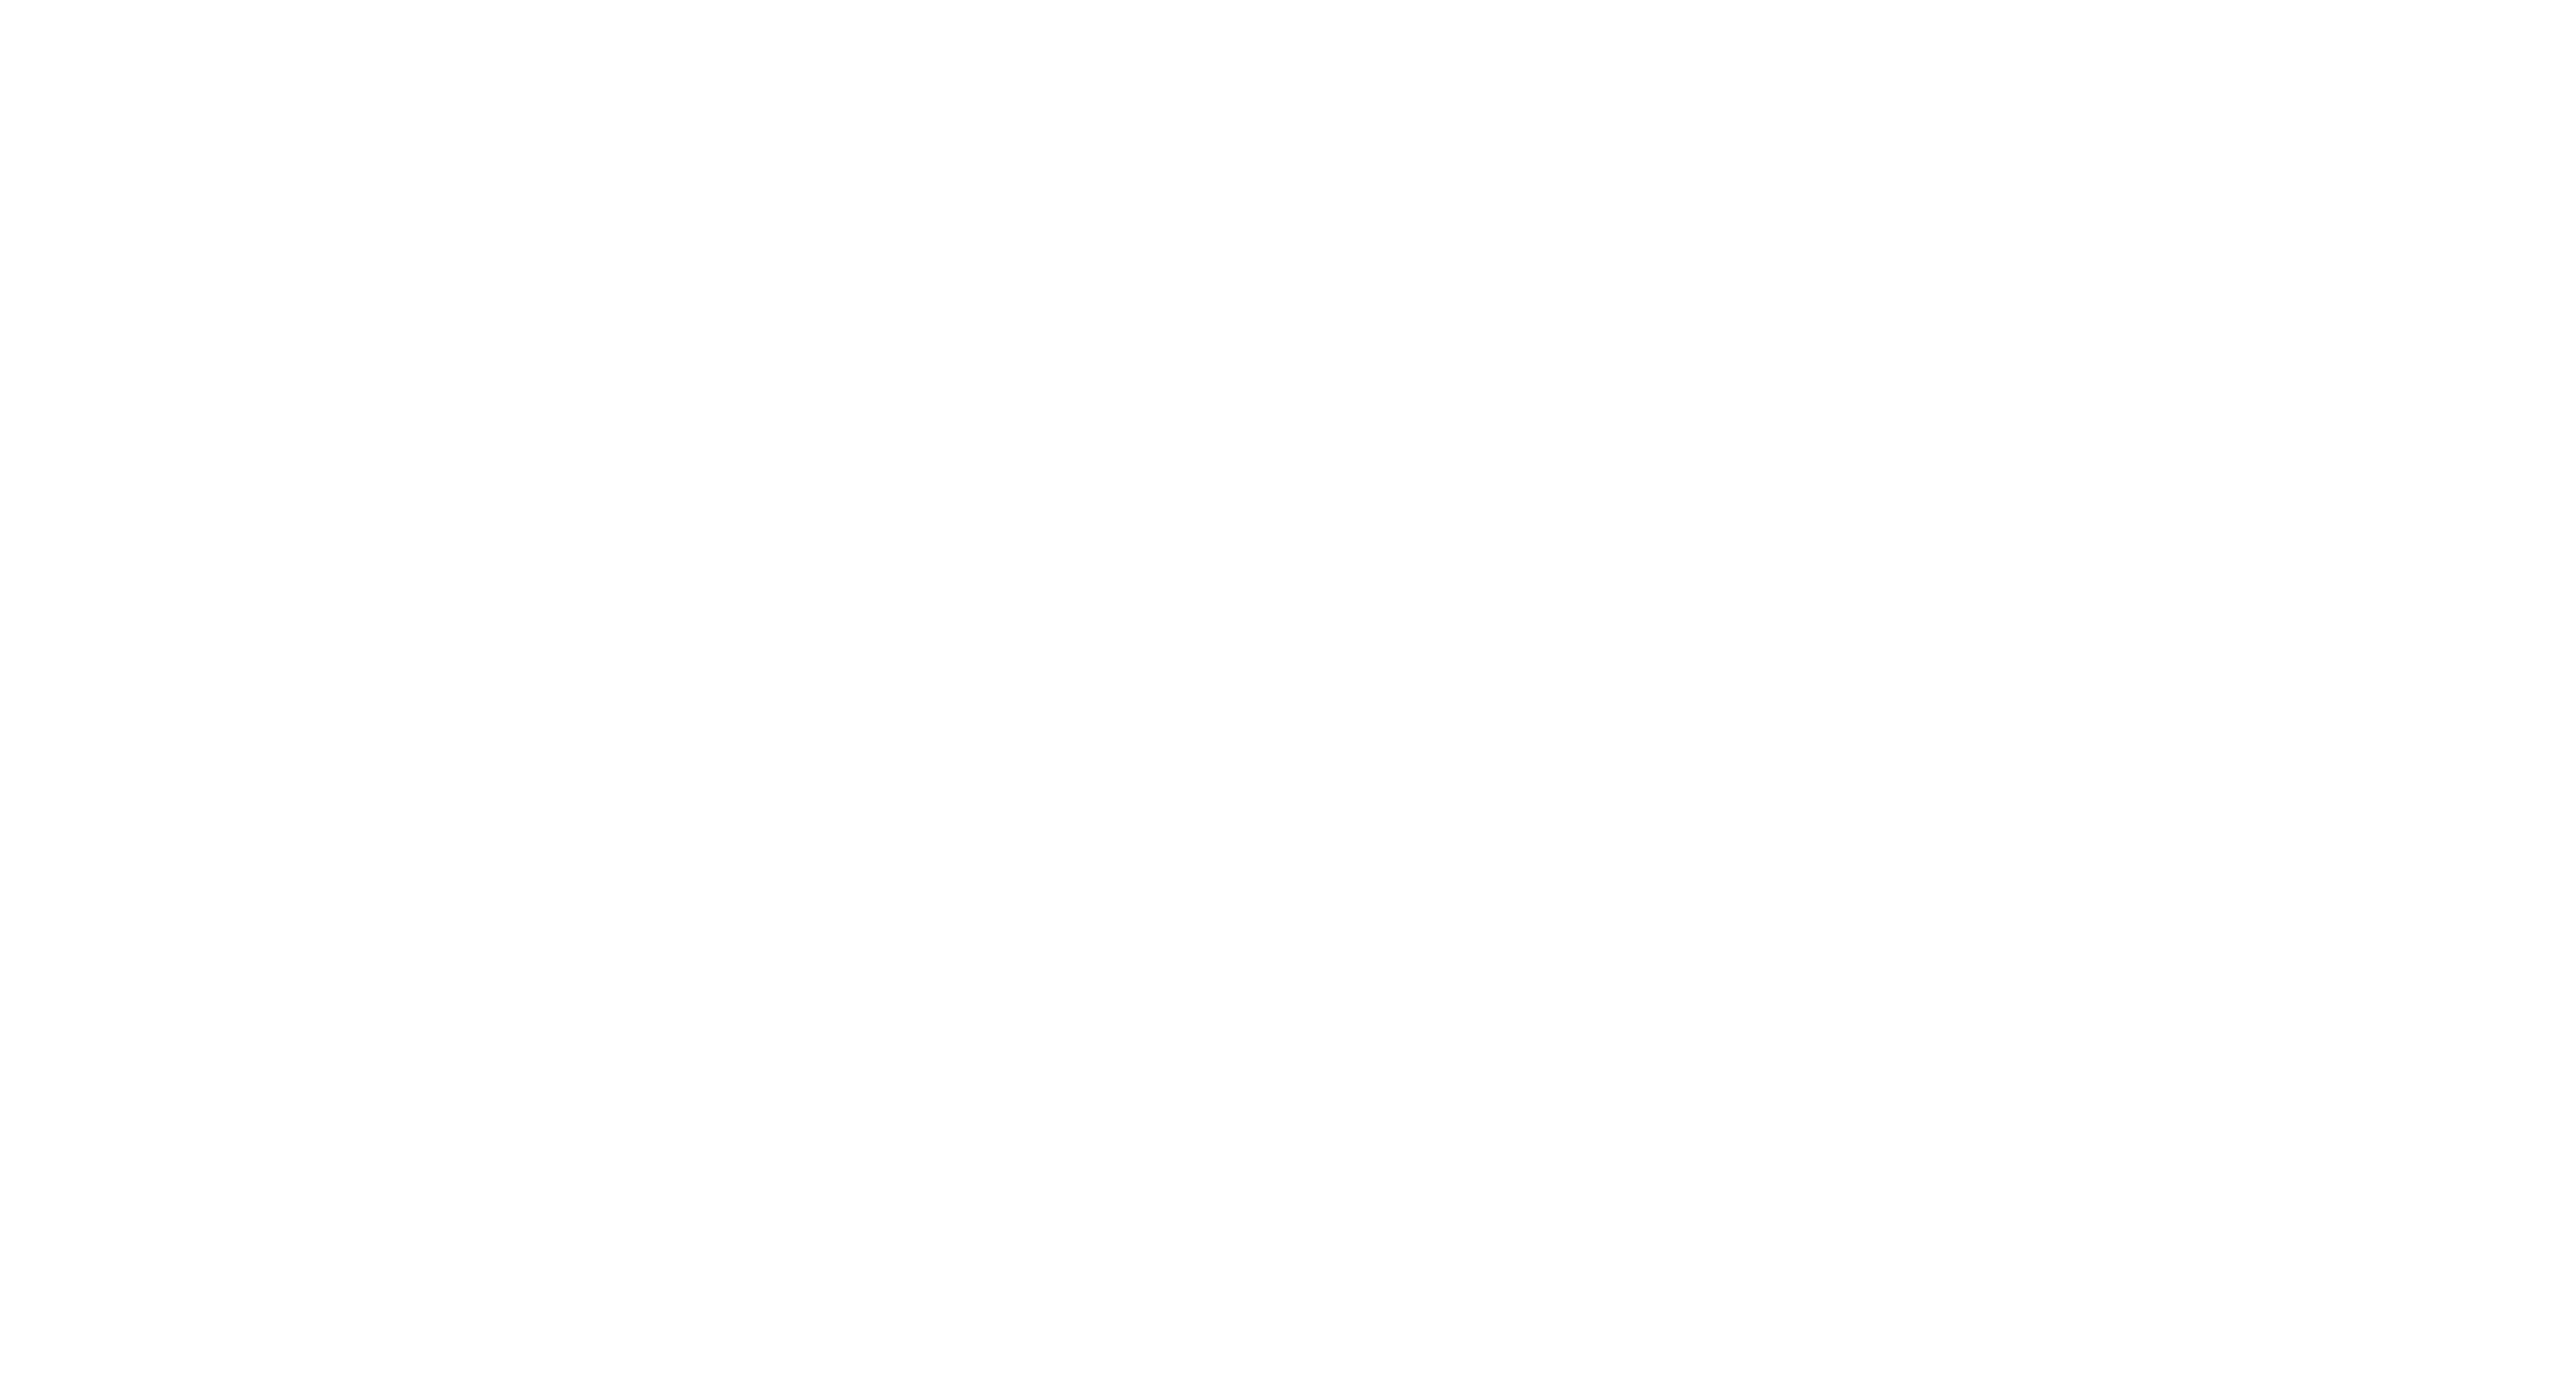 JRC_company_logos.svg